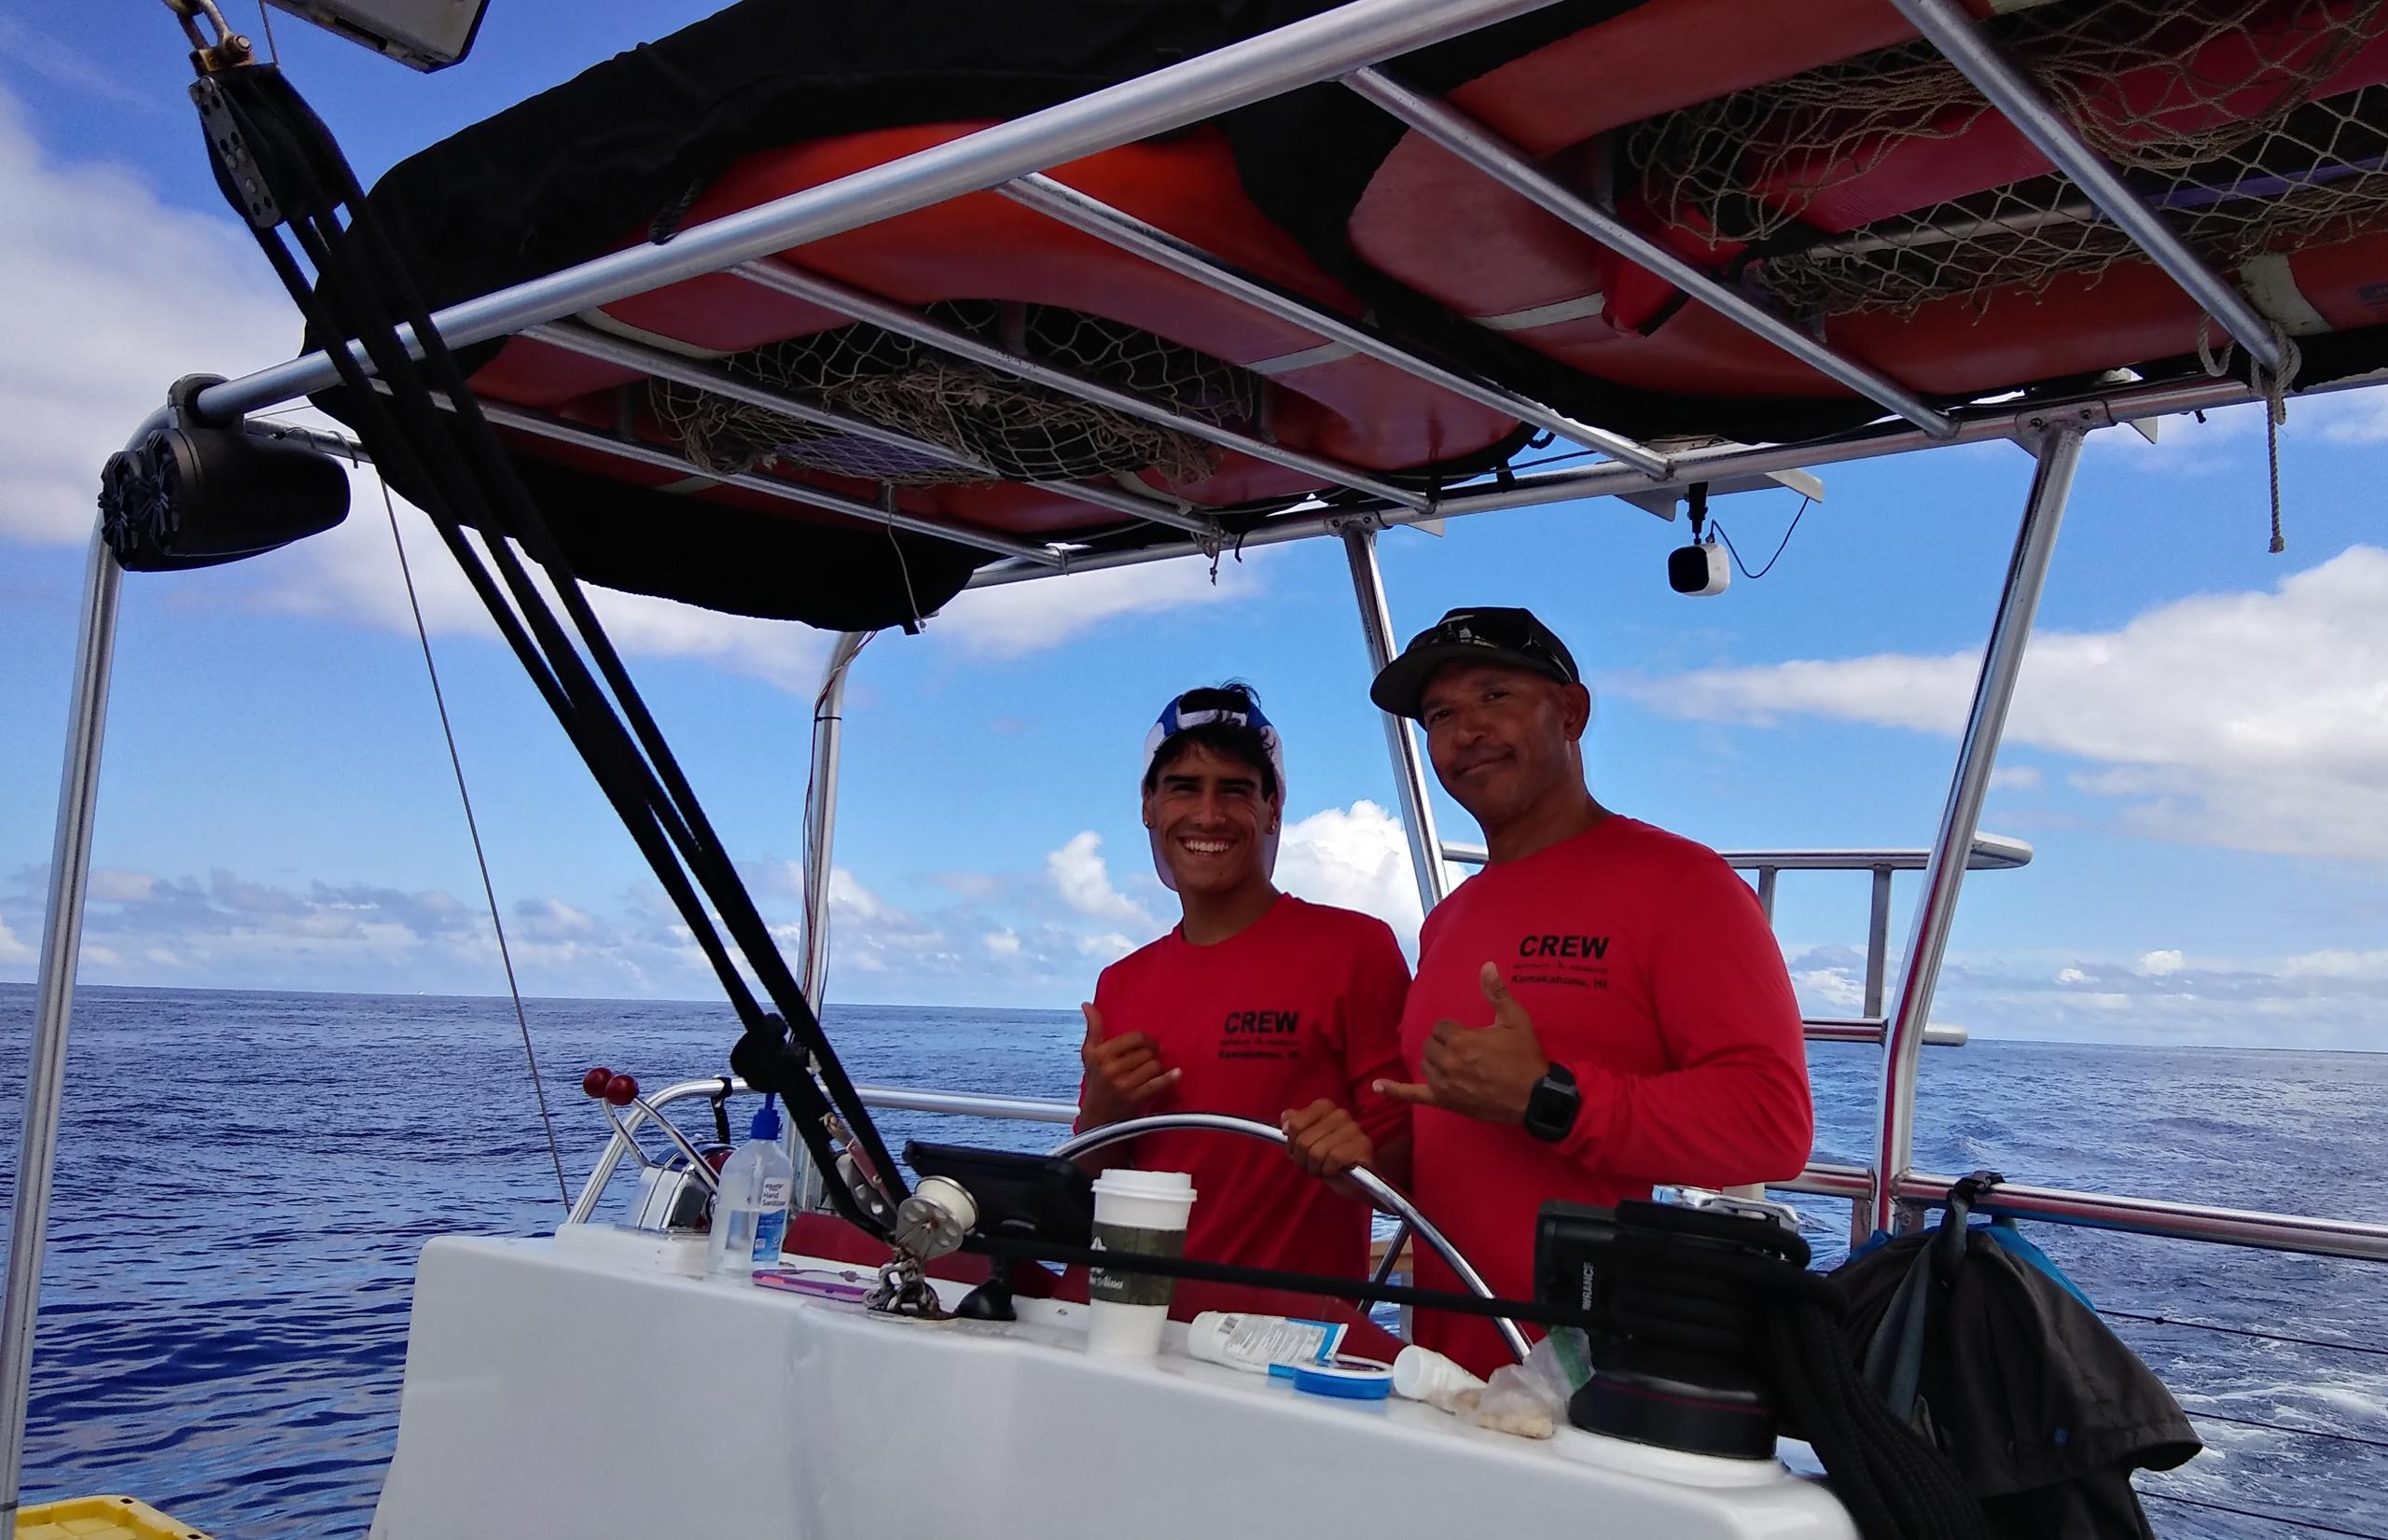 Marine adventure in Kailua-Kona